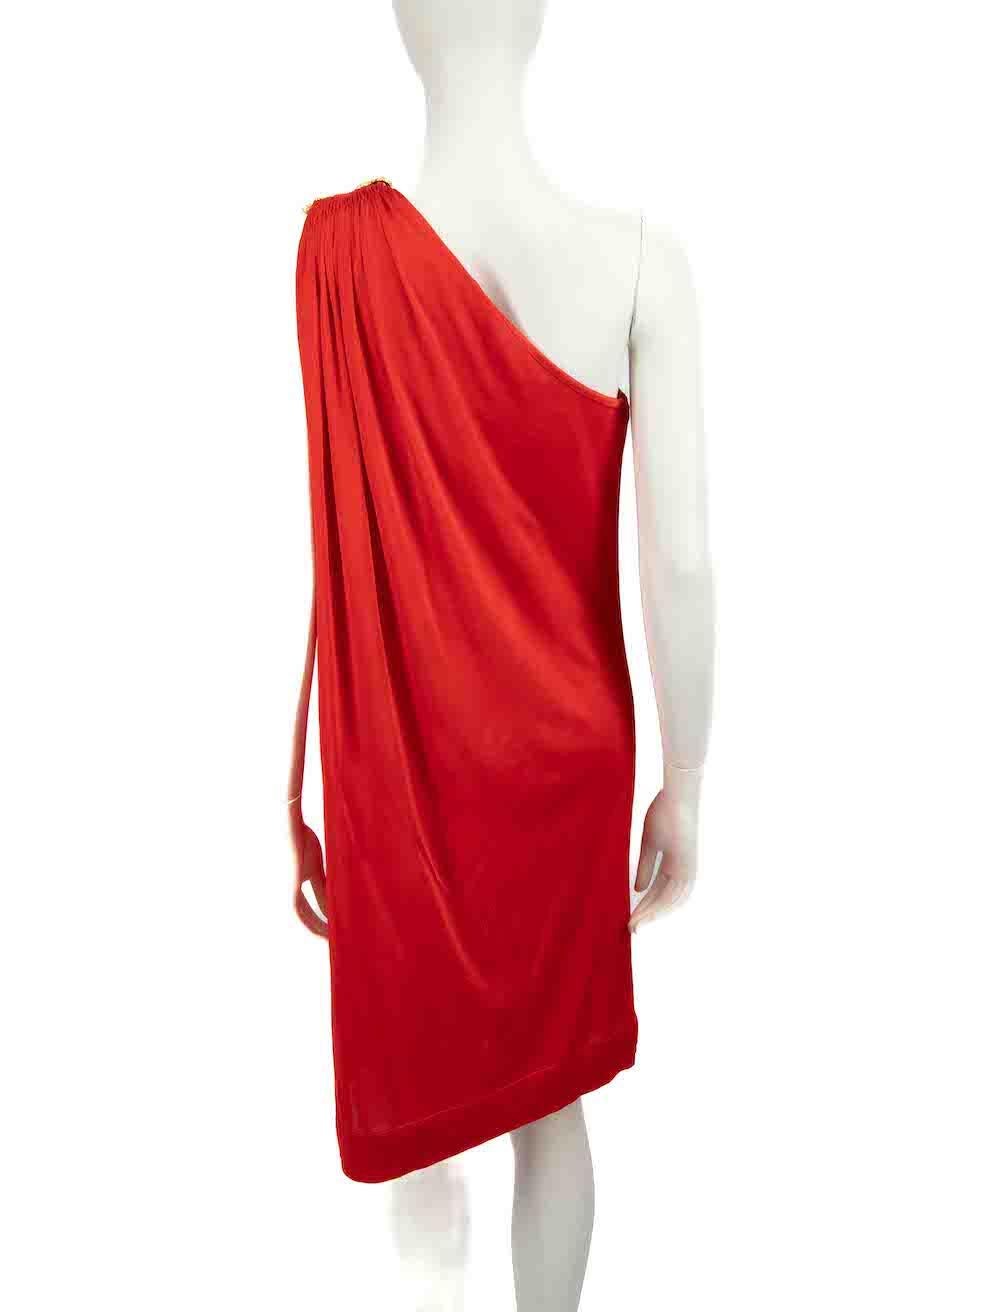 Roberto Cavalli Red One-Shoulder Drape Mini Dress Size L In Good Condition For Sale In London, GB